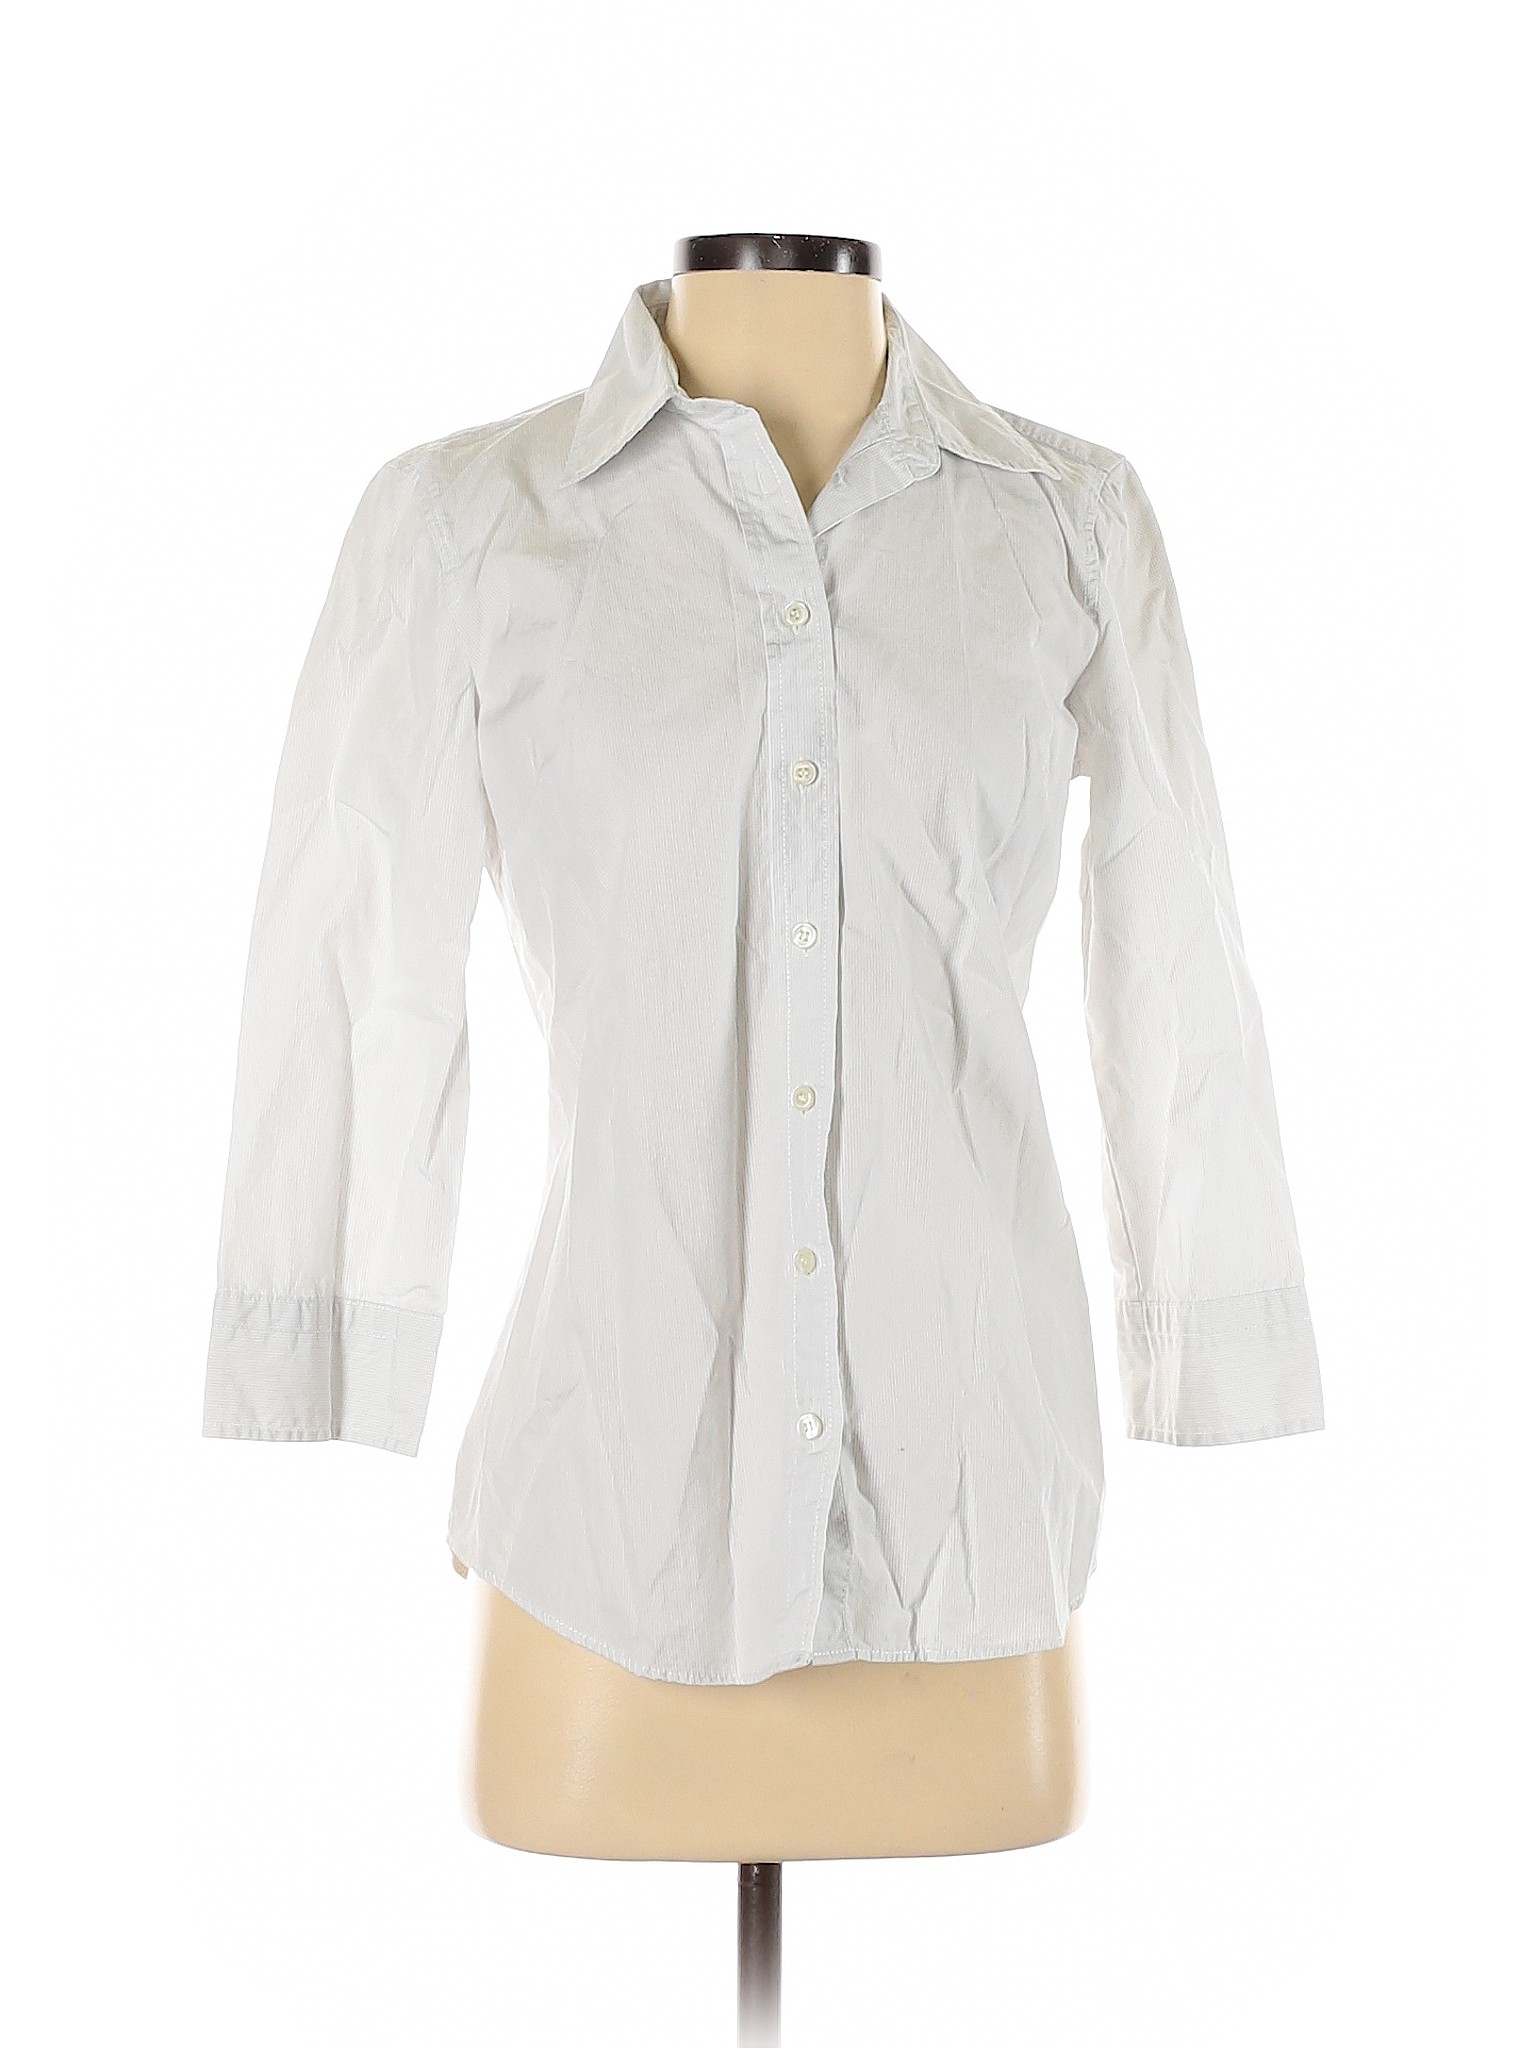 J.Crew Factory Store Women White 3/4 Sleeve Button-Down Shirt S | eBay